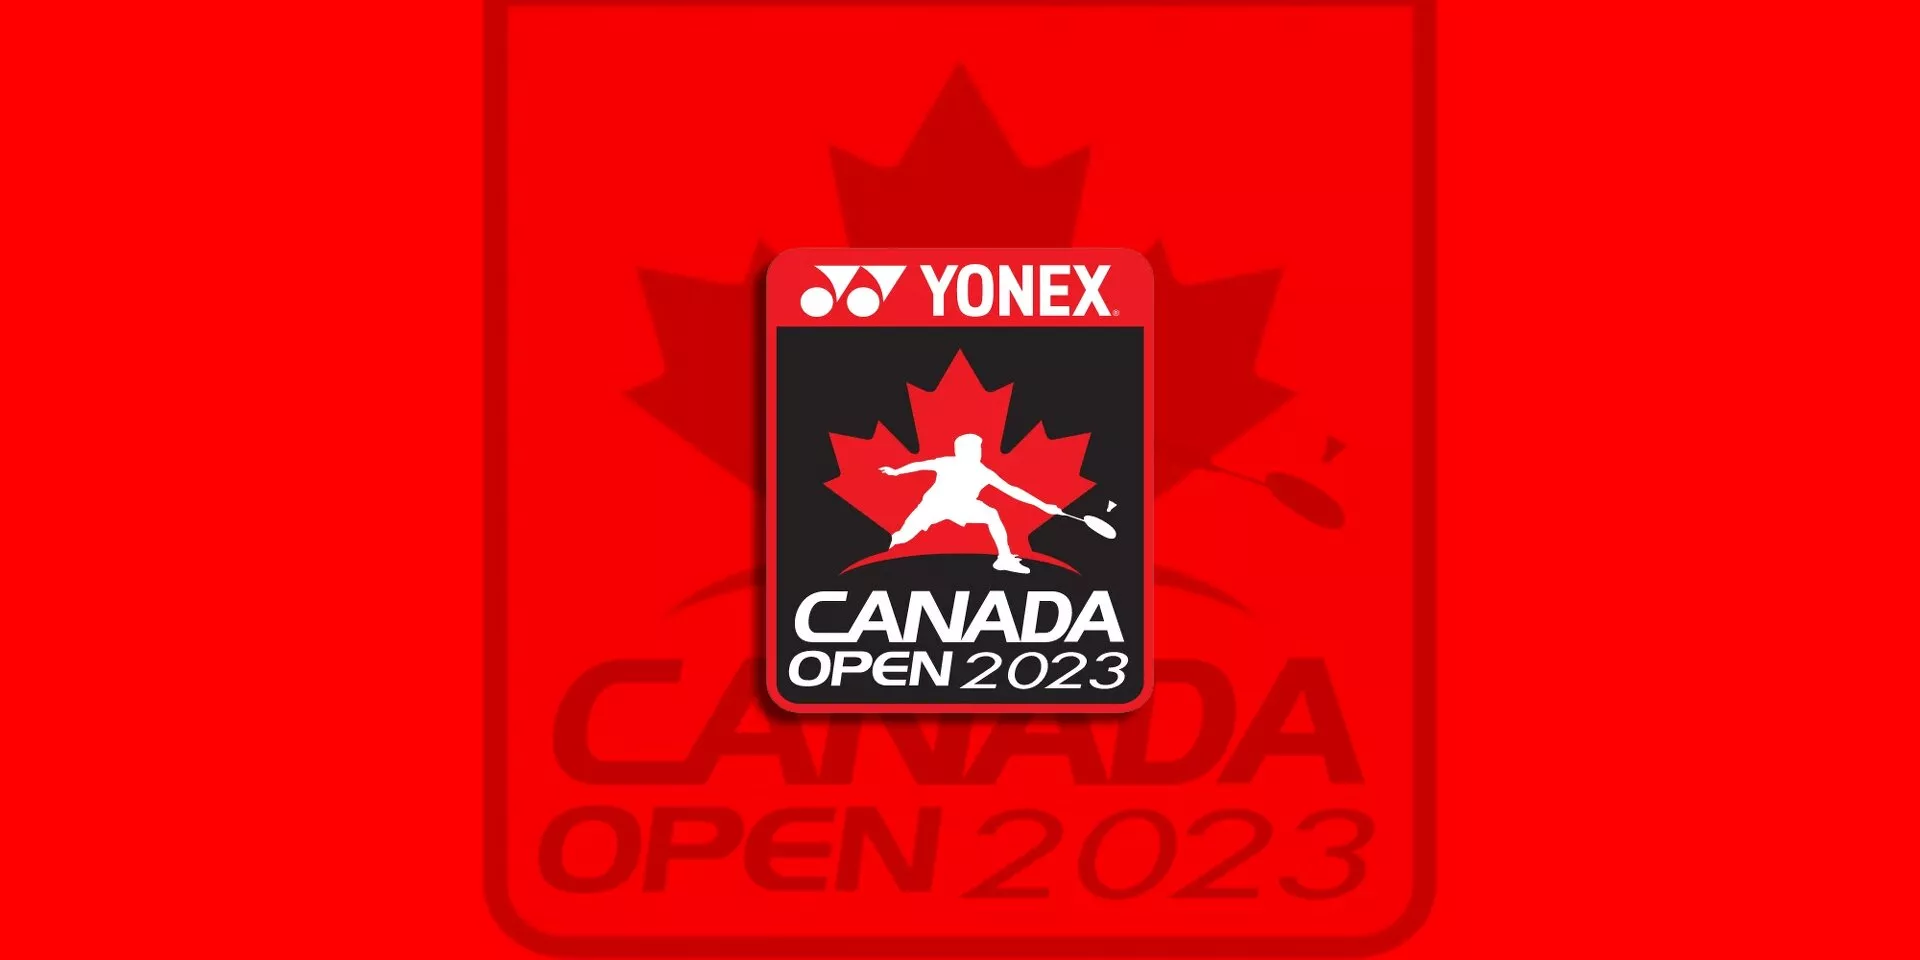 Di mana dan bagaimana cara menonton Canada Open 2023 secara langsung di Indonesia?